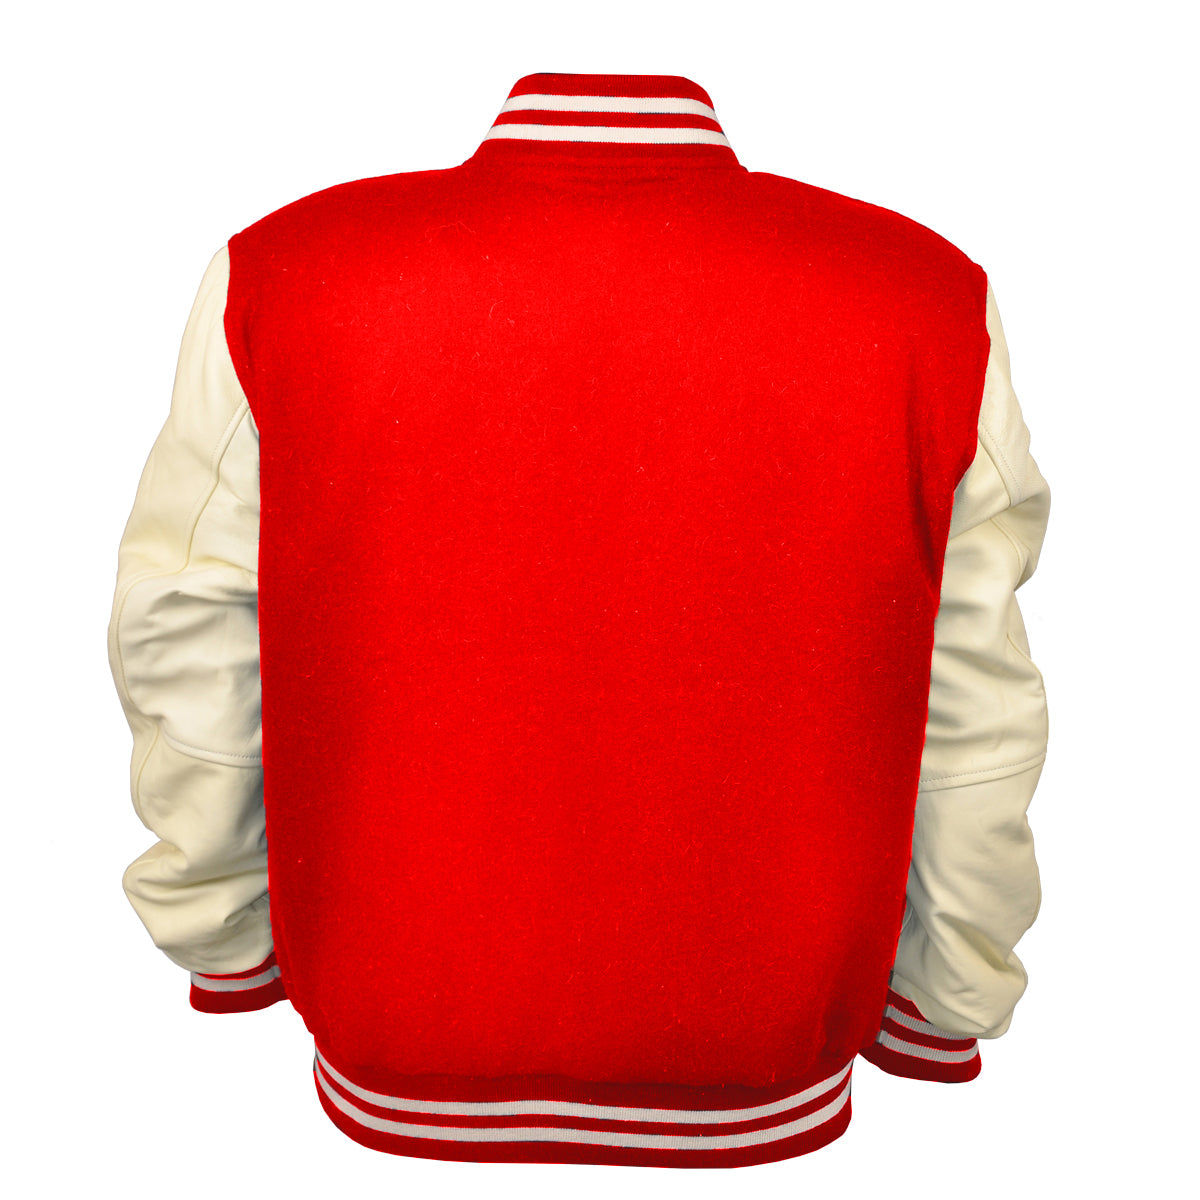 Deckra Sports Men's Varsity Jackets Genuine Leather Sleeve and Wool Body Red/Yellow Medium